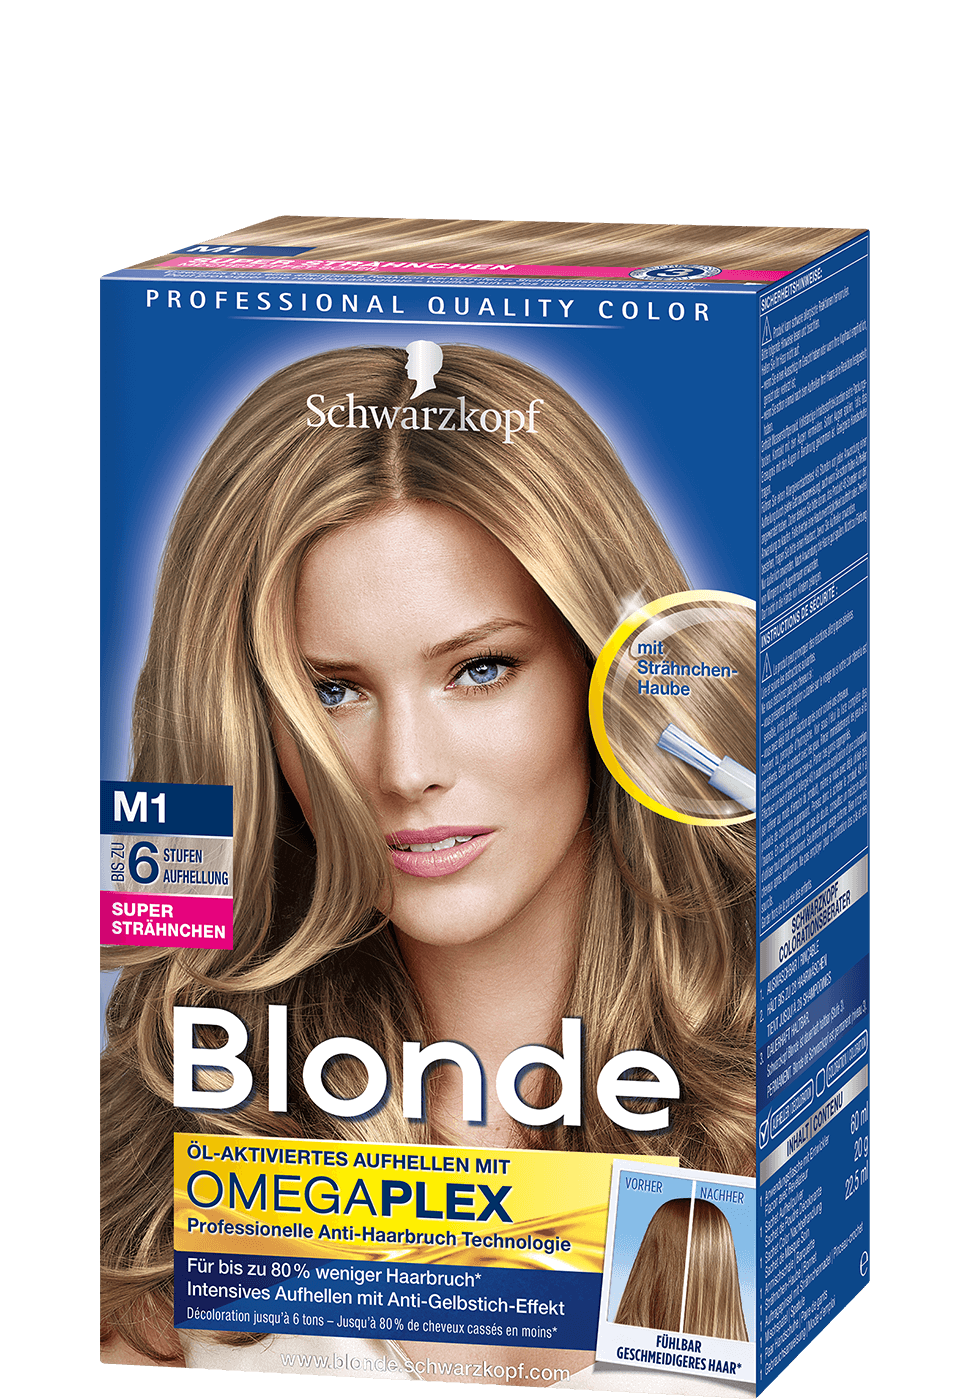 Dunkler Haaransatz Bei Blondinen